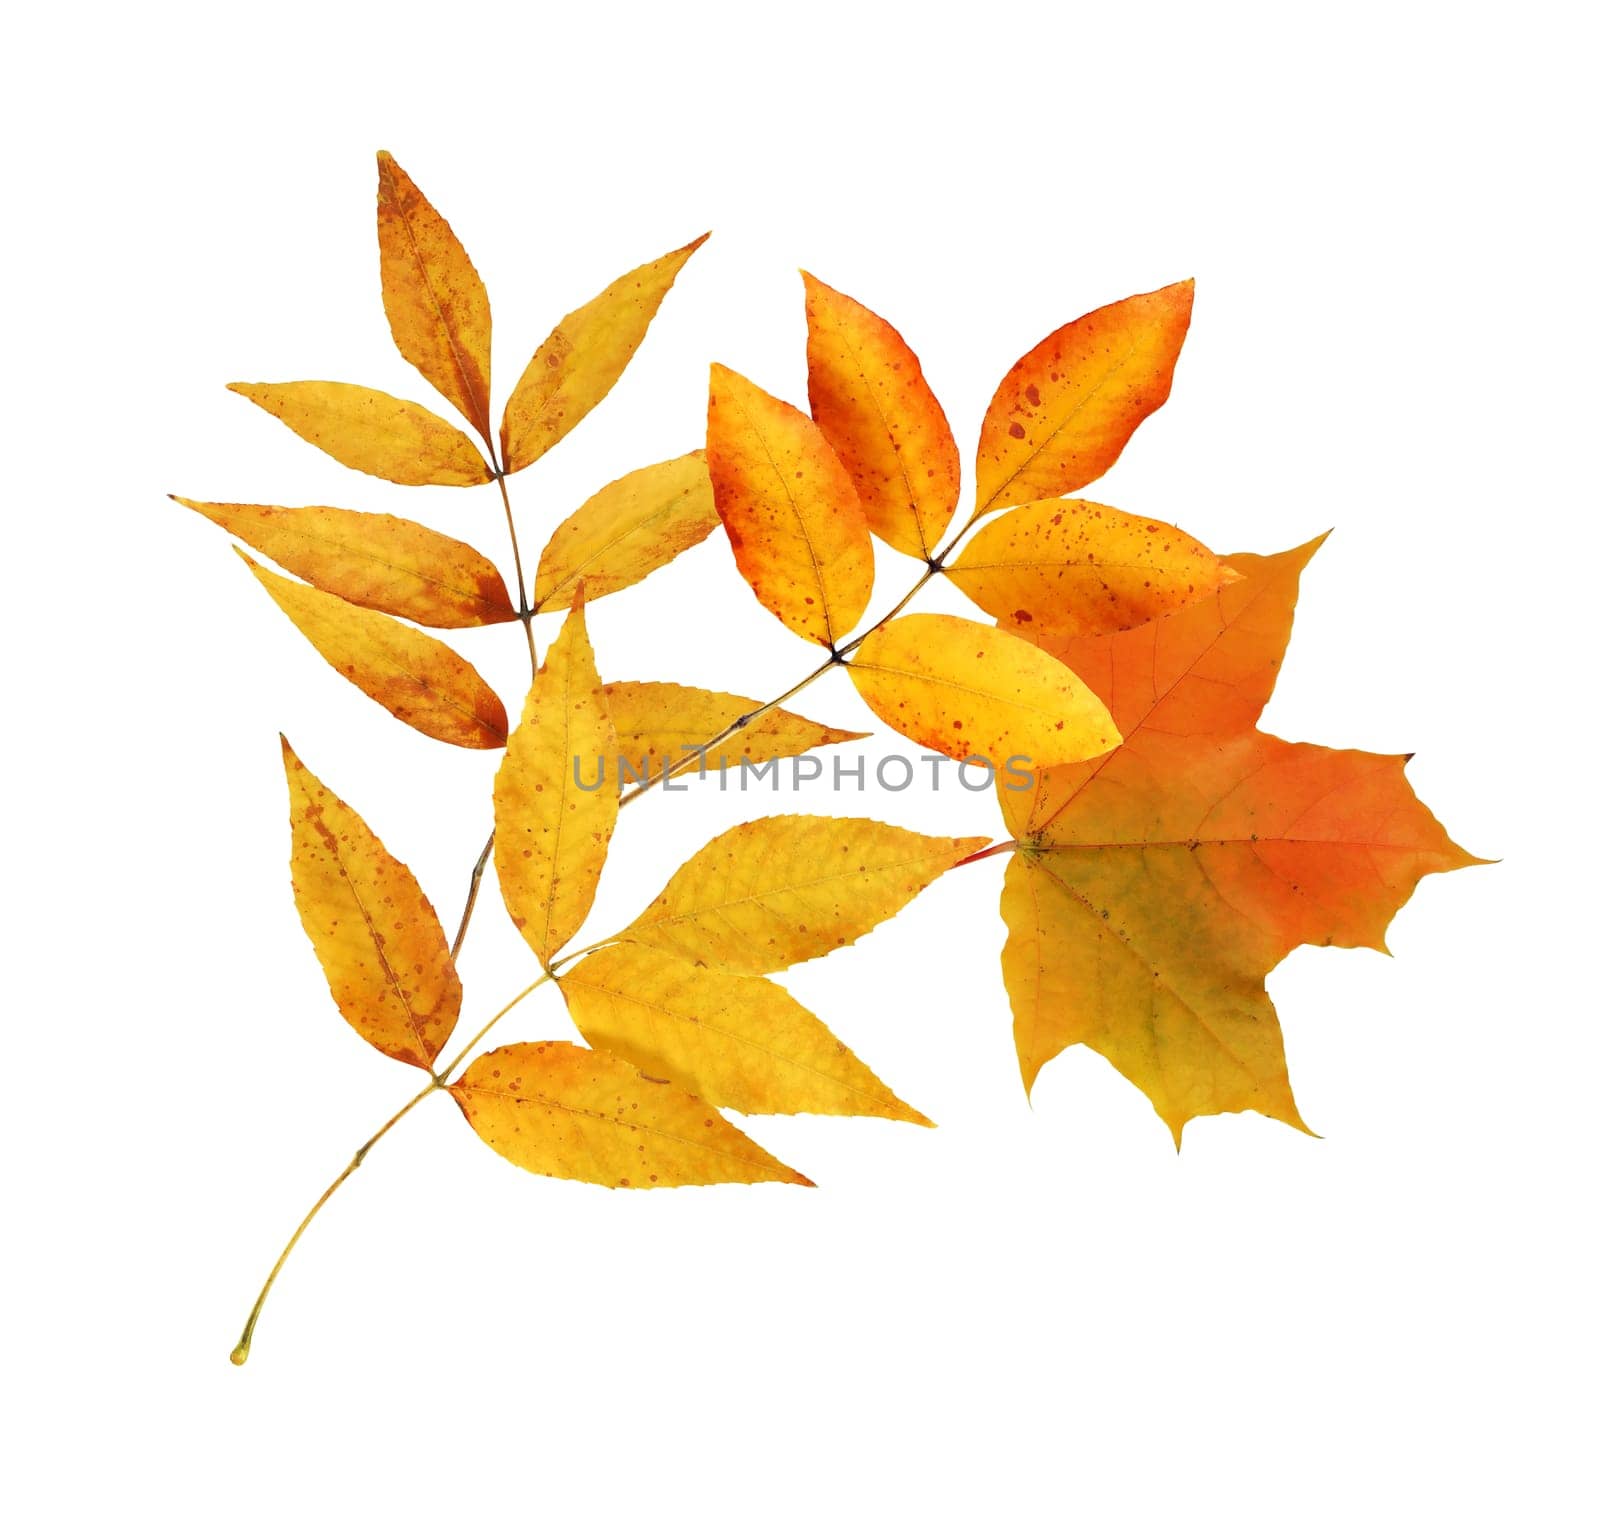 Leaf Fall by kvkirillov